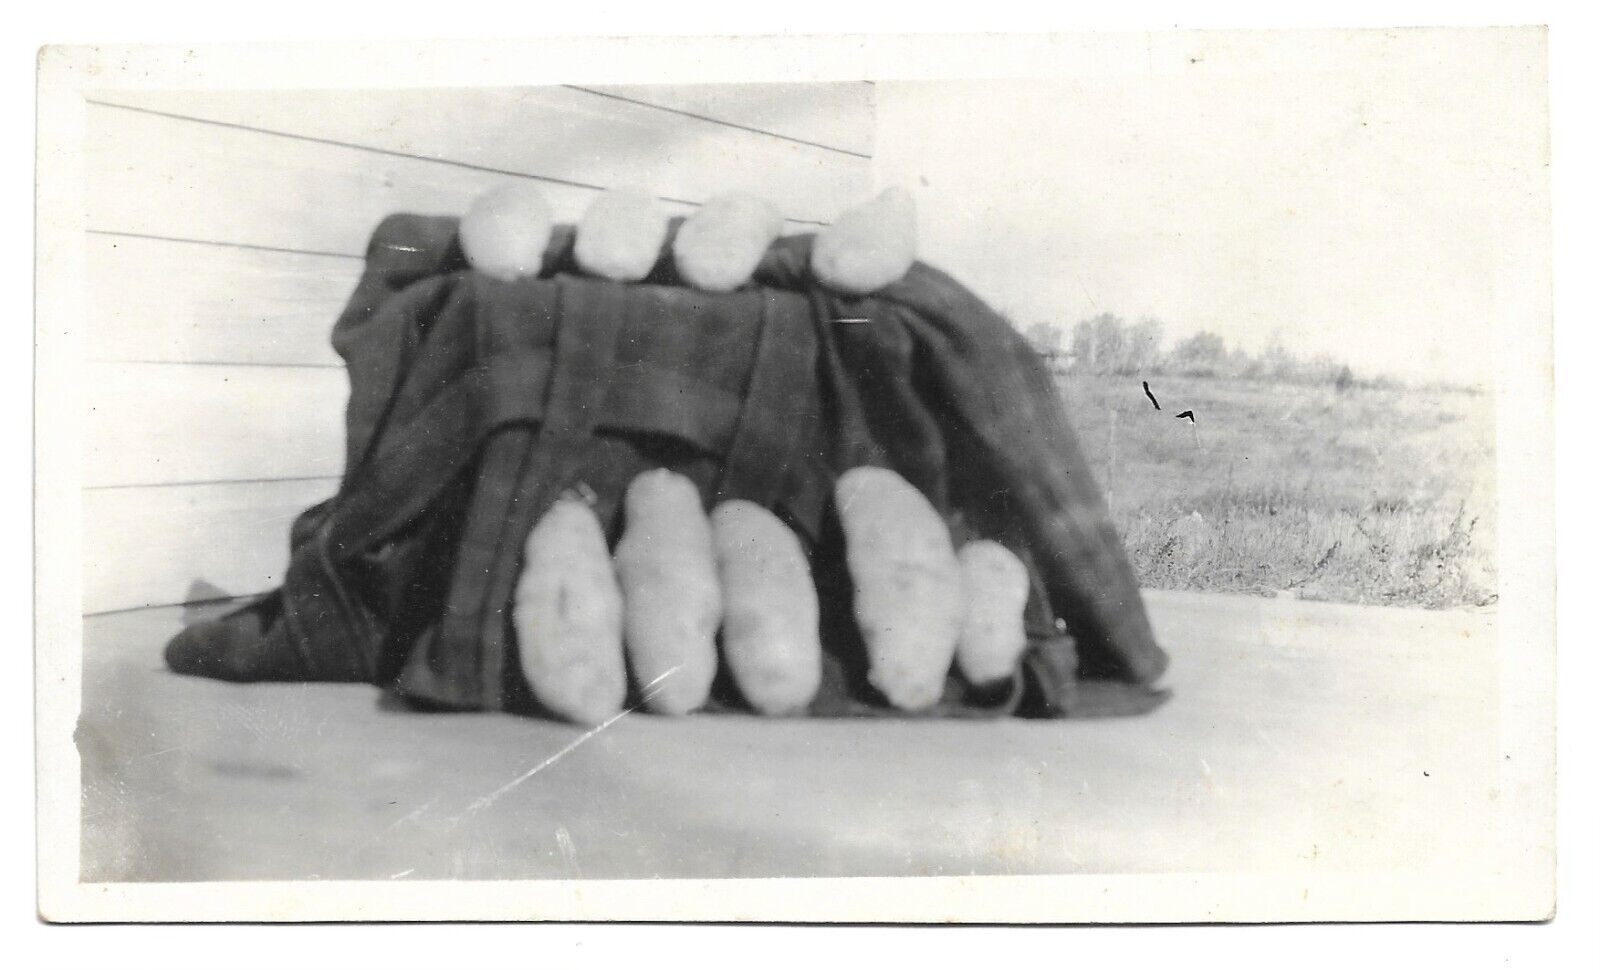 Unusual Potatoe Display, Still Life, Vintage Snapshot Photo